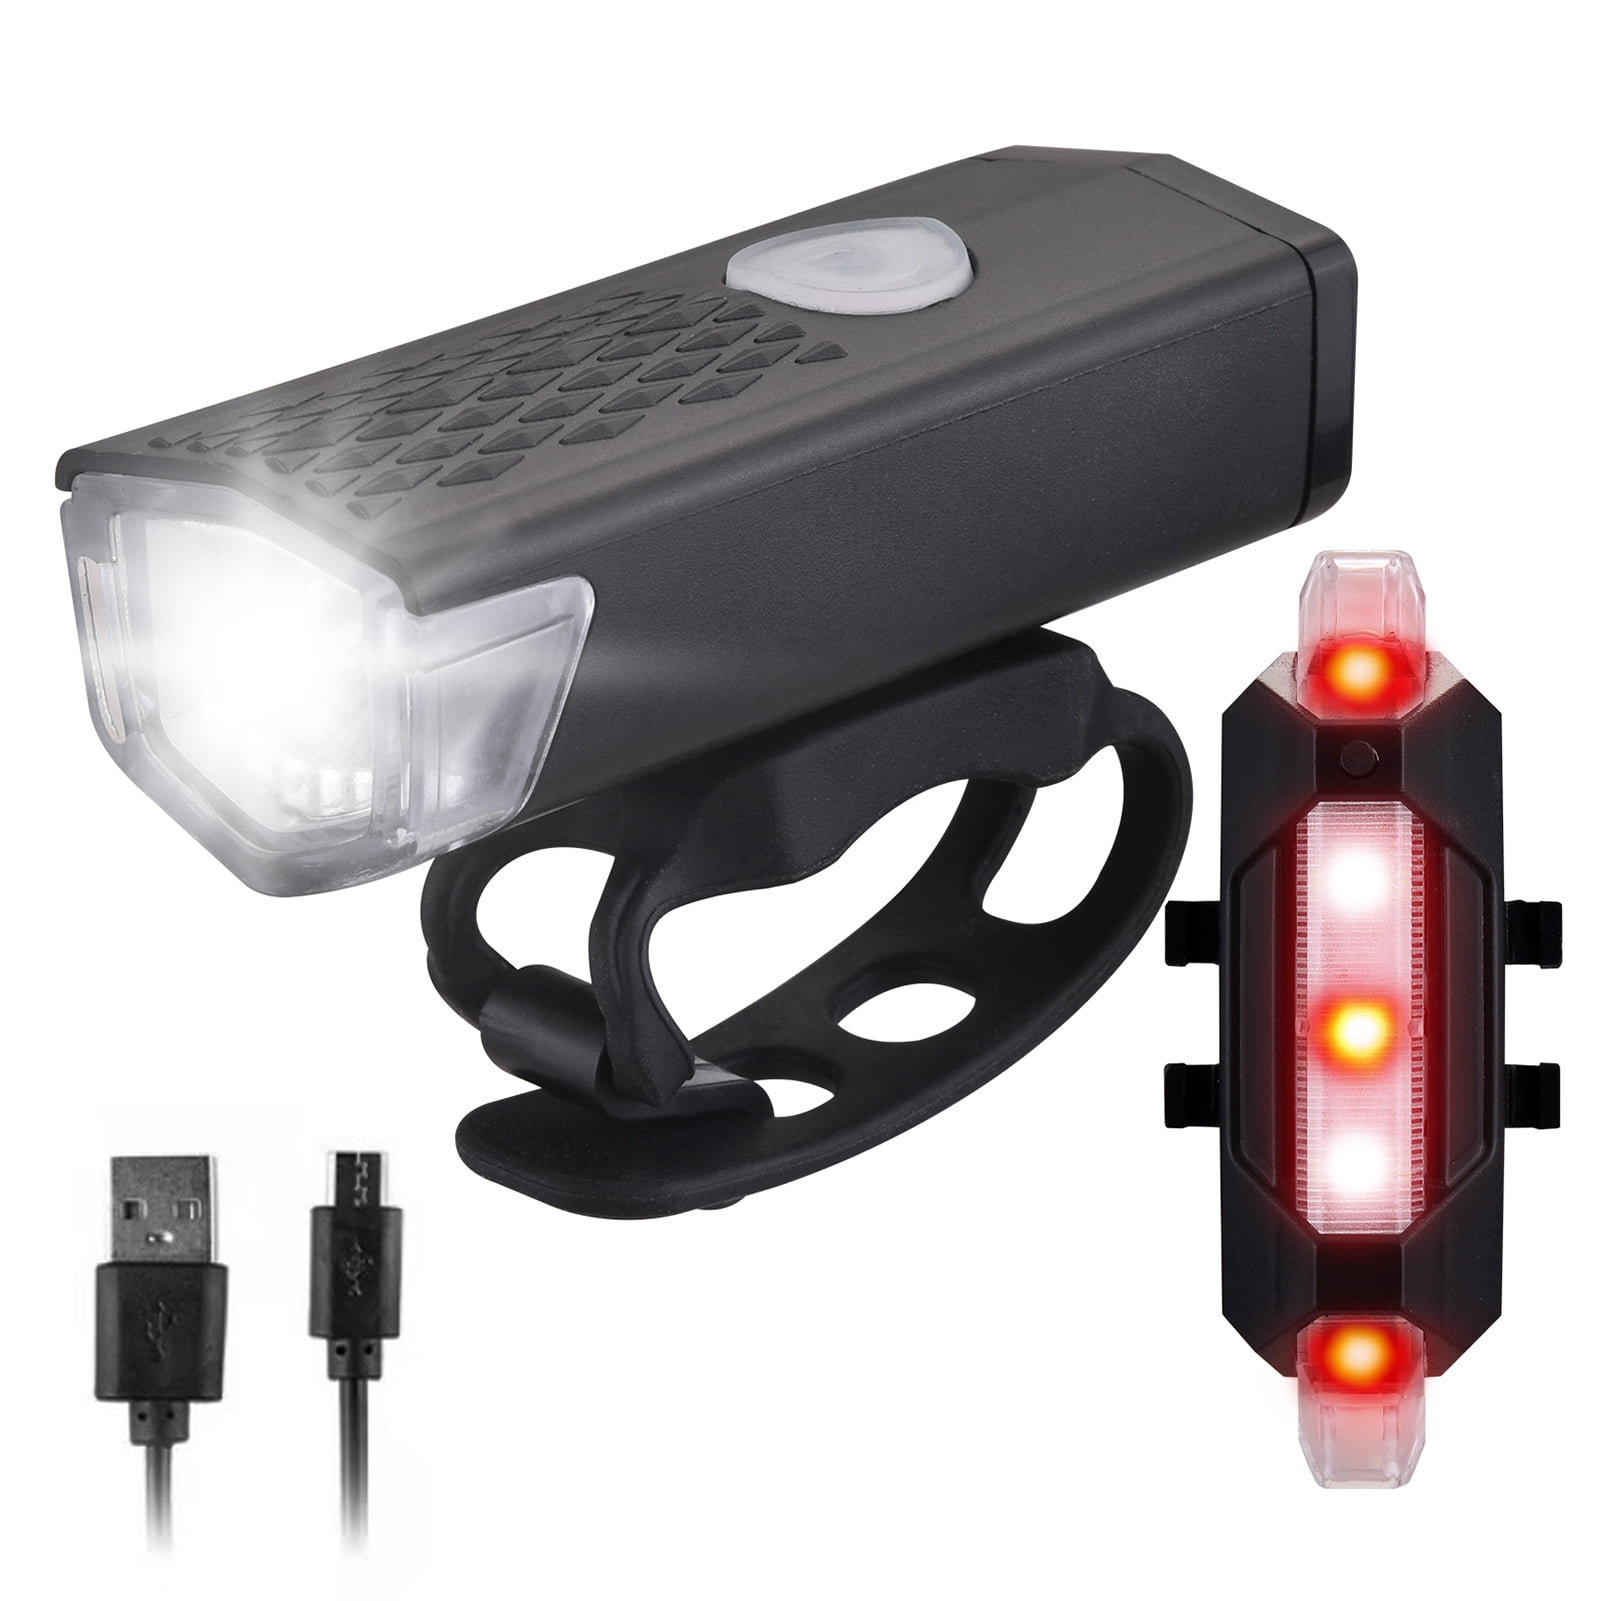 Details about   USB Rechargeable Bike Lights Front Rear Hazard Light Waterproof 5 LED 3 color